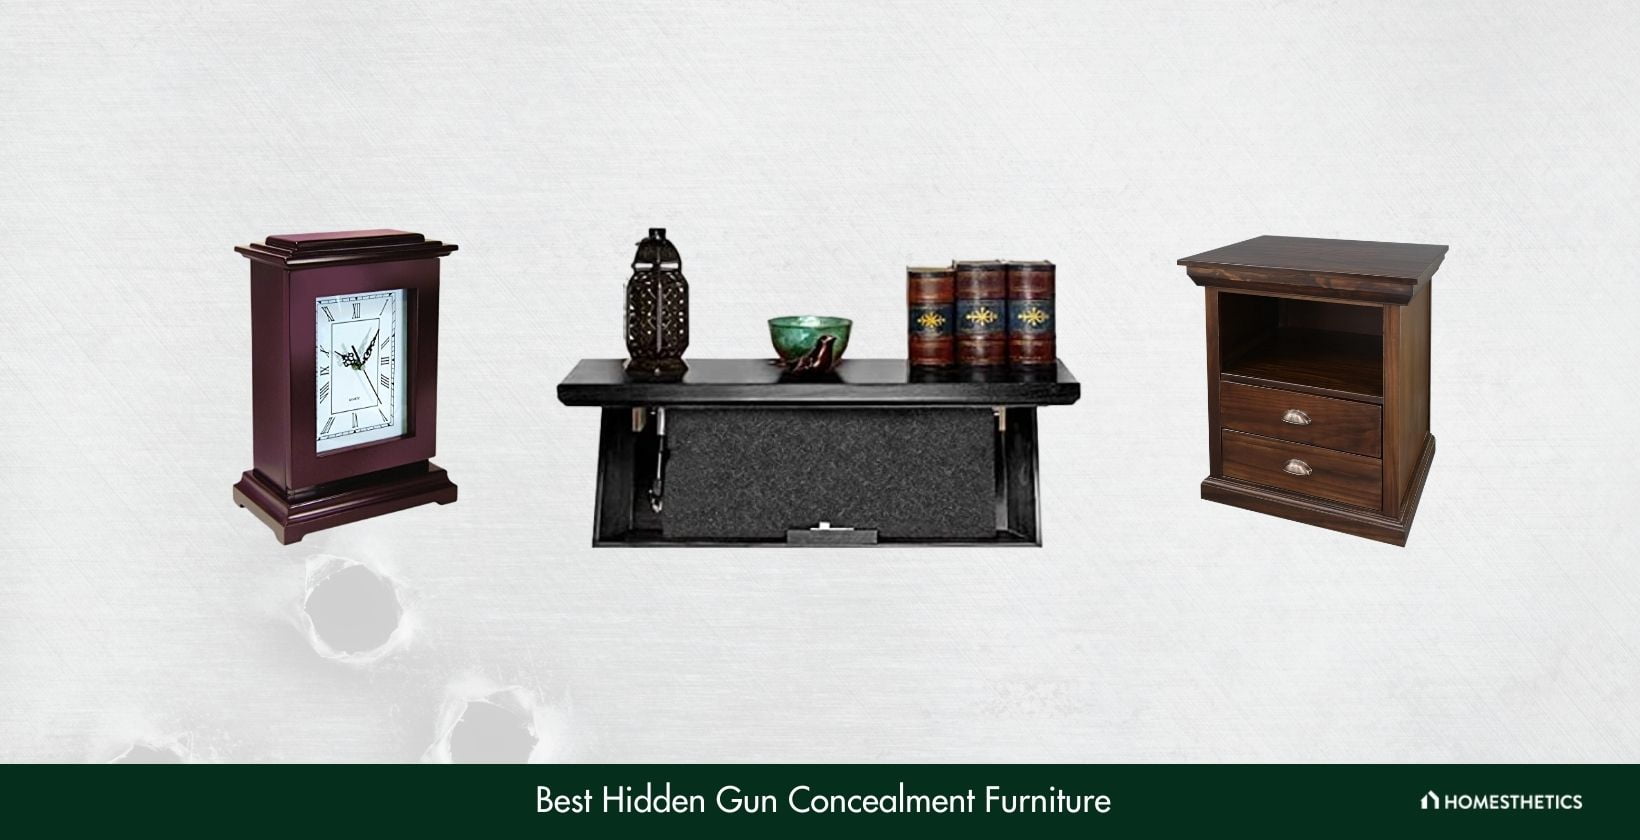 Best Hidden Gun Concealment Furniture